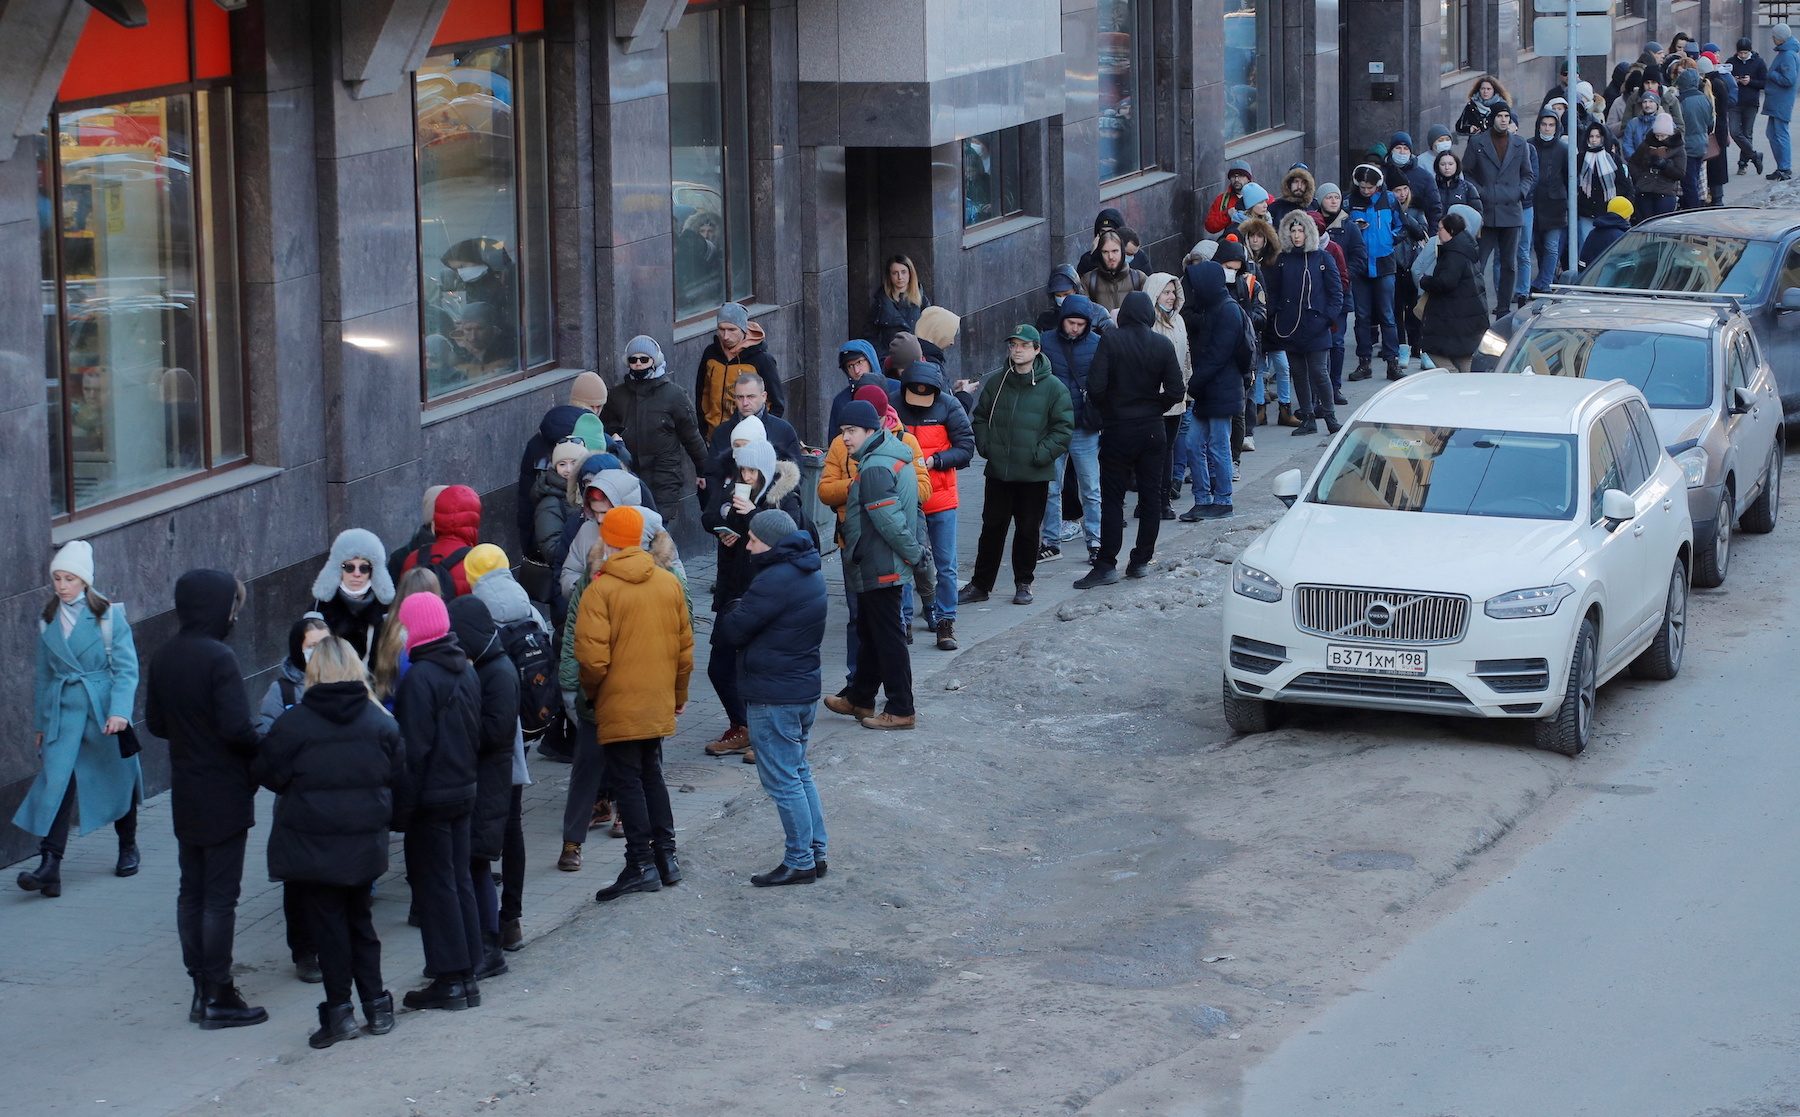 Russians queue for cash as West targets banks over Ukraine